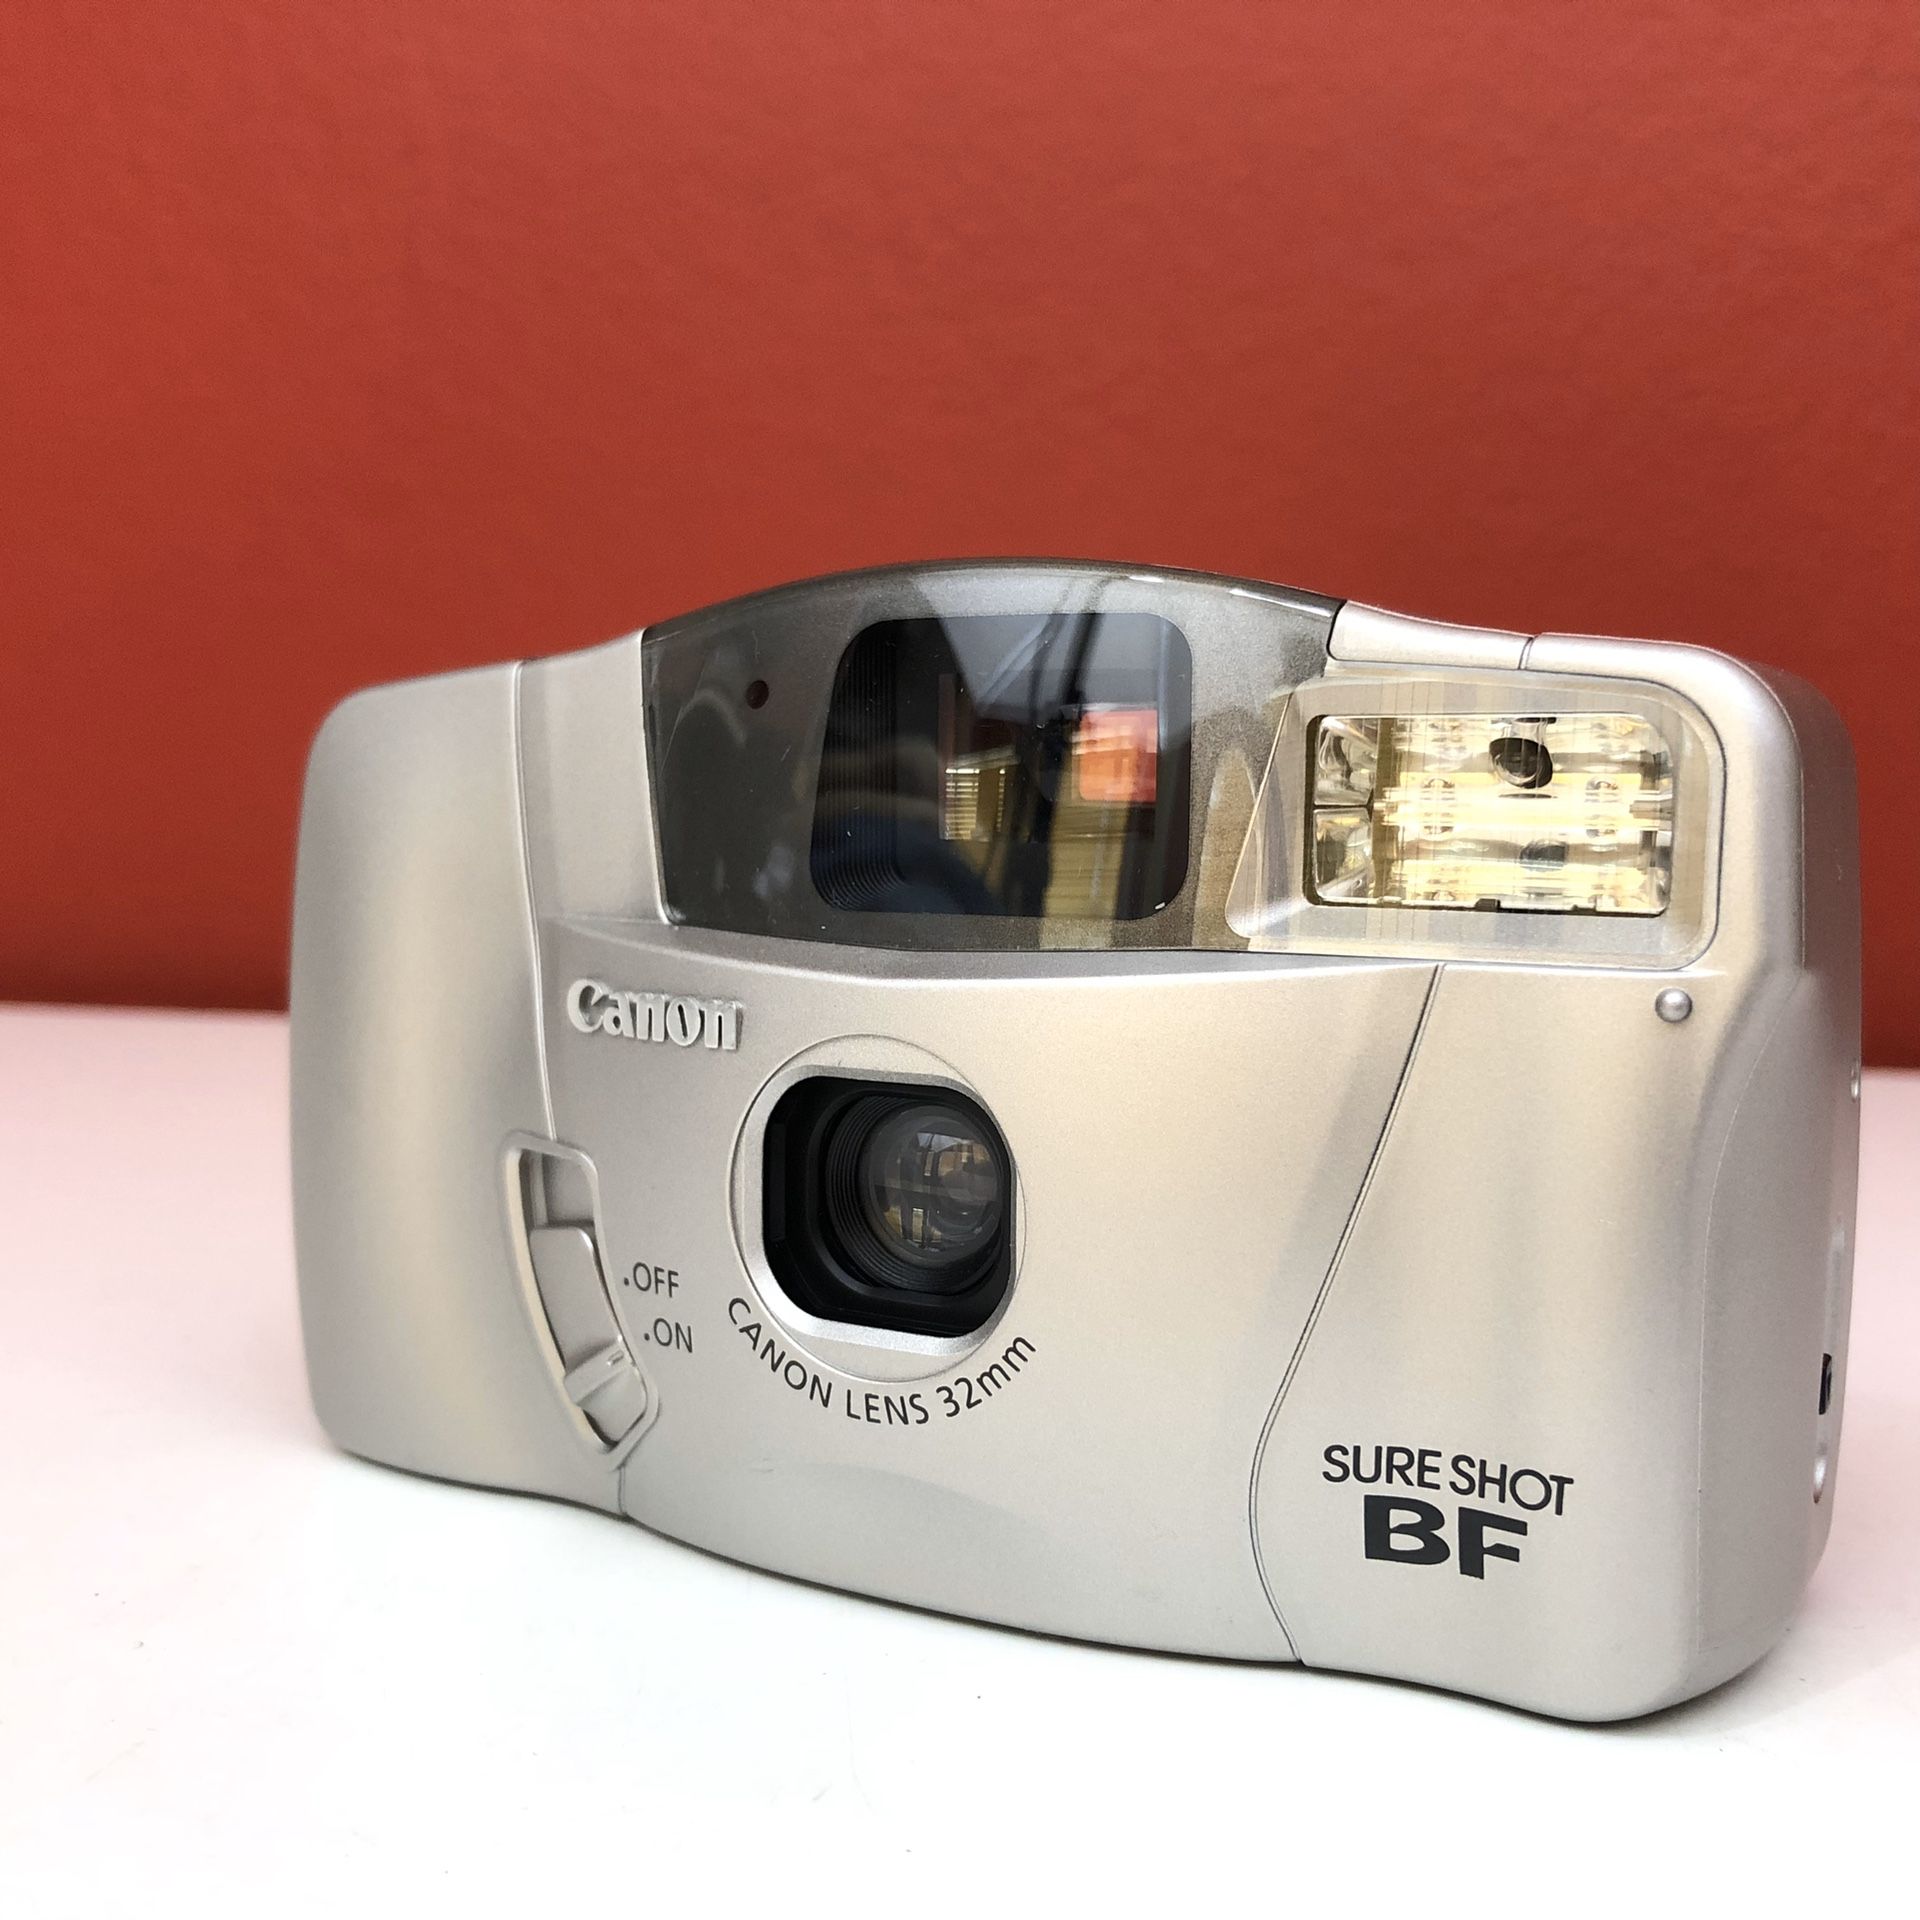 New Canon Sureshot BF film camera